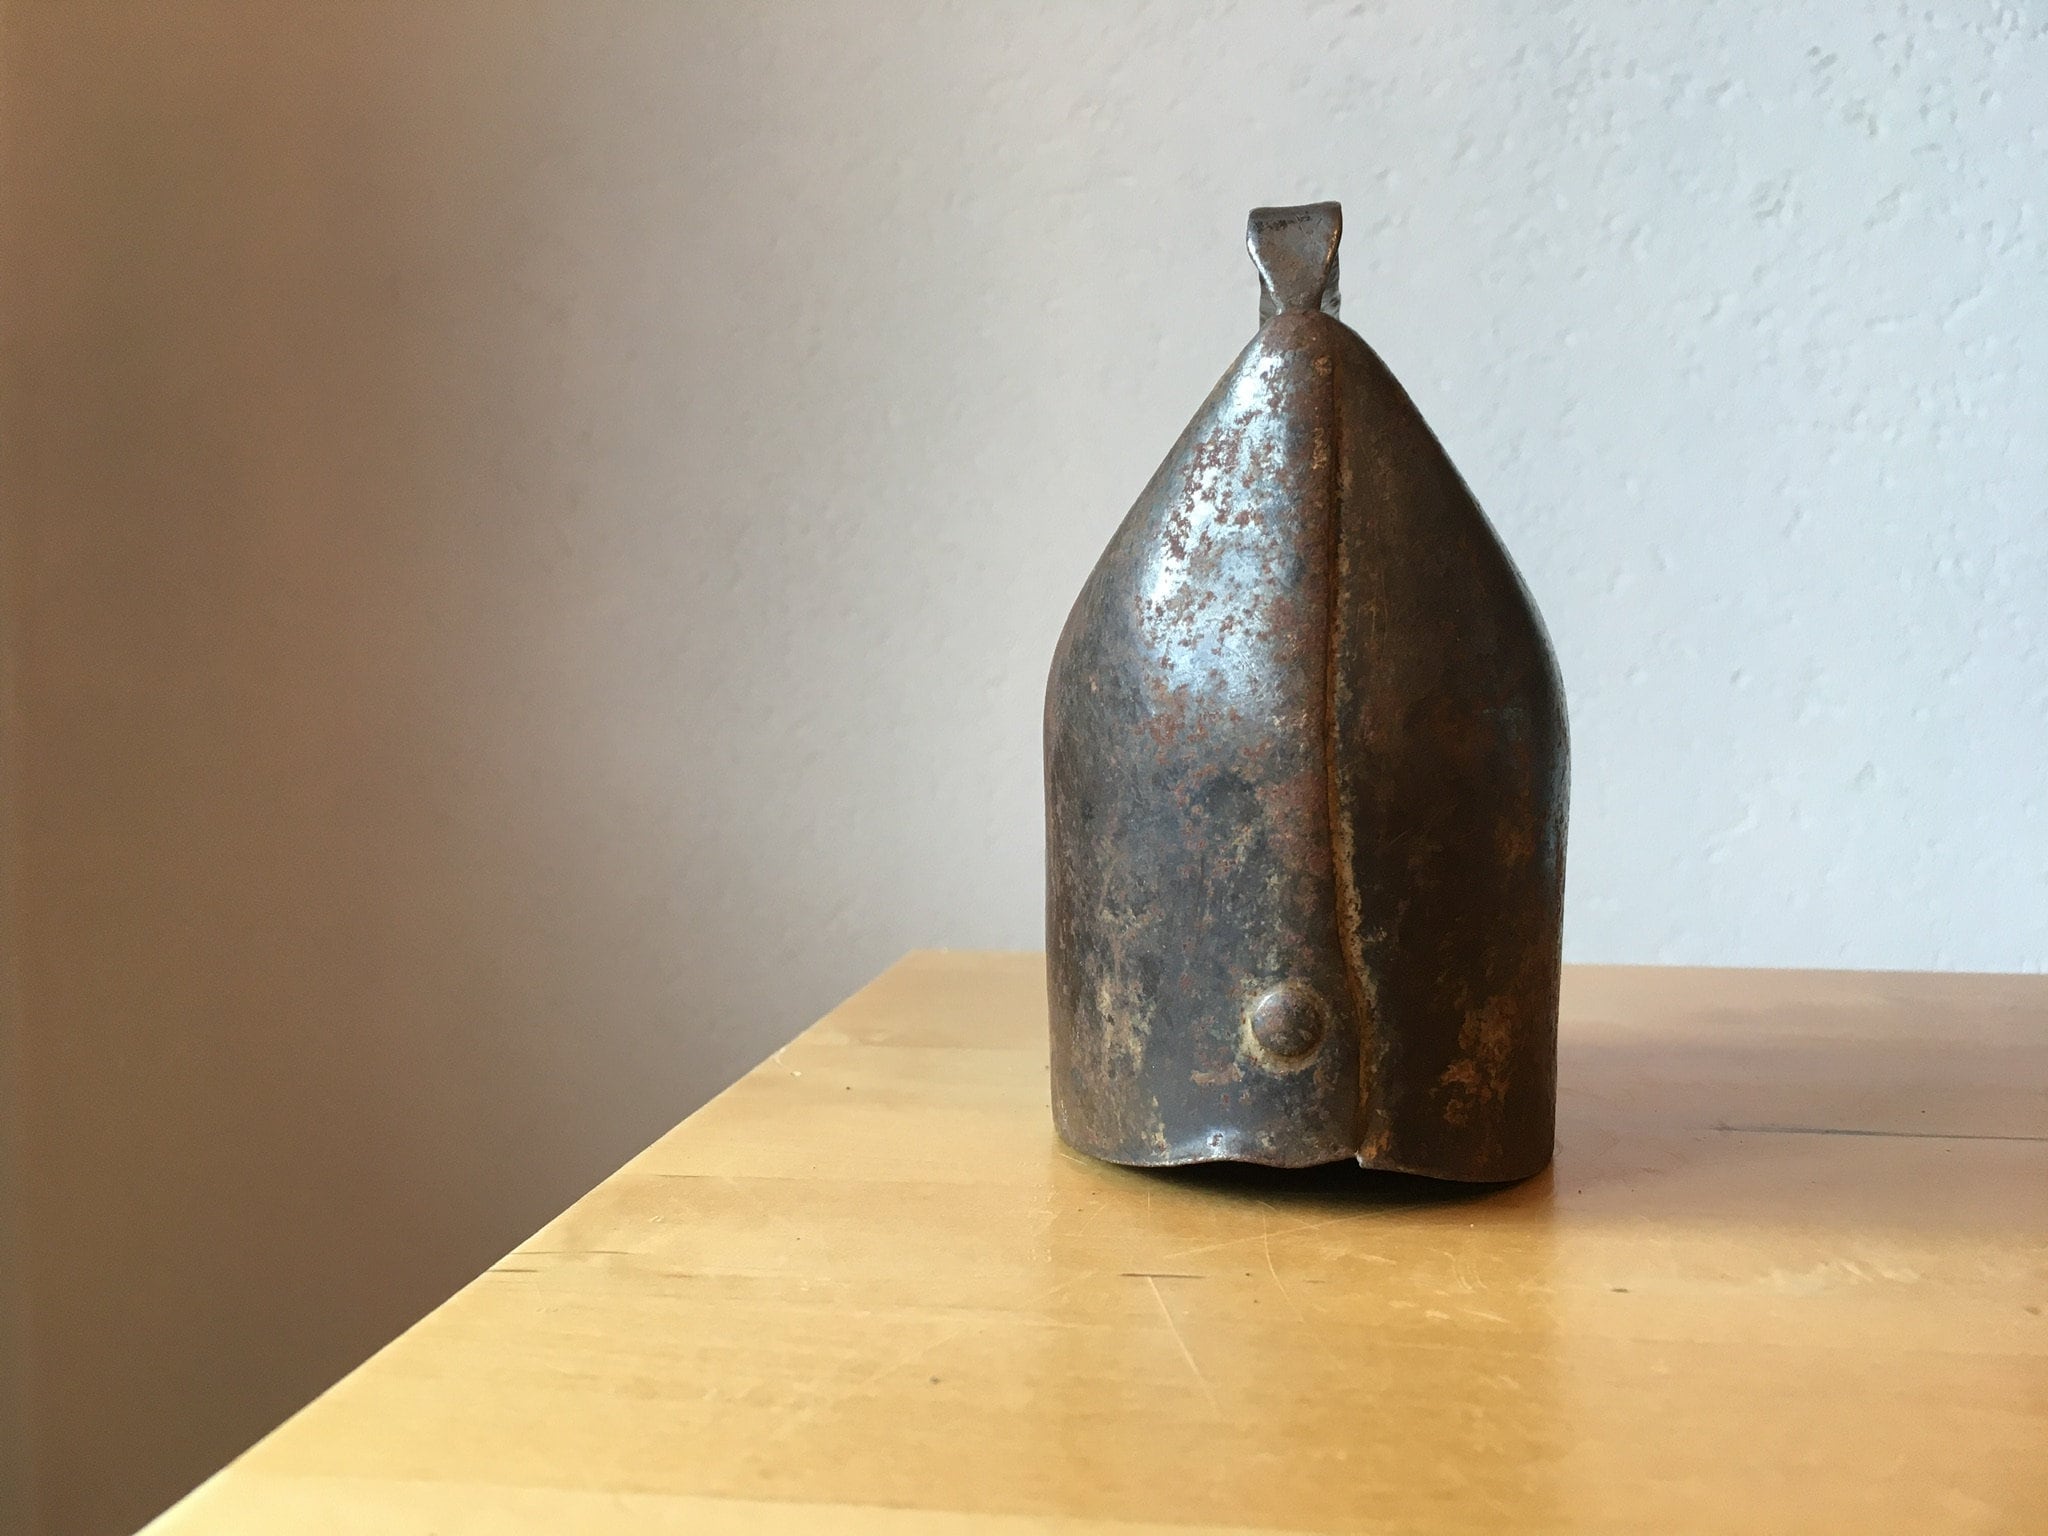 Vintage bell, Devouassoud Chamonix 0 bell, metal